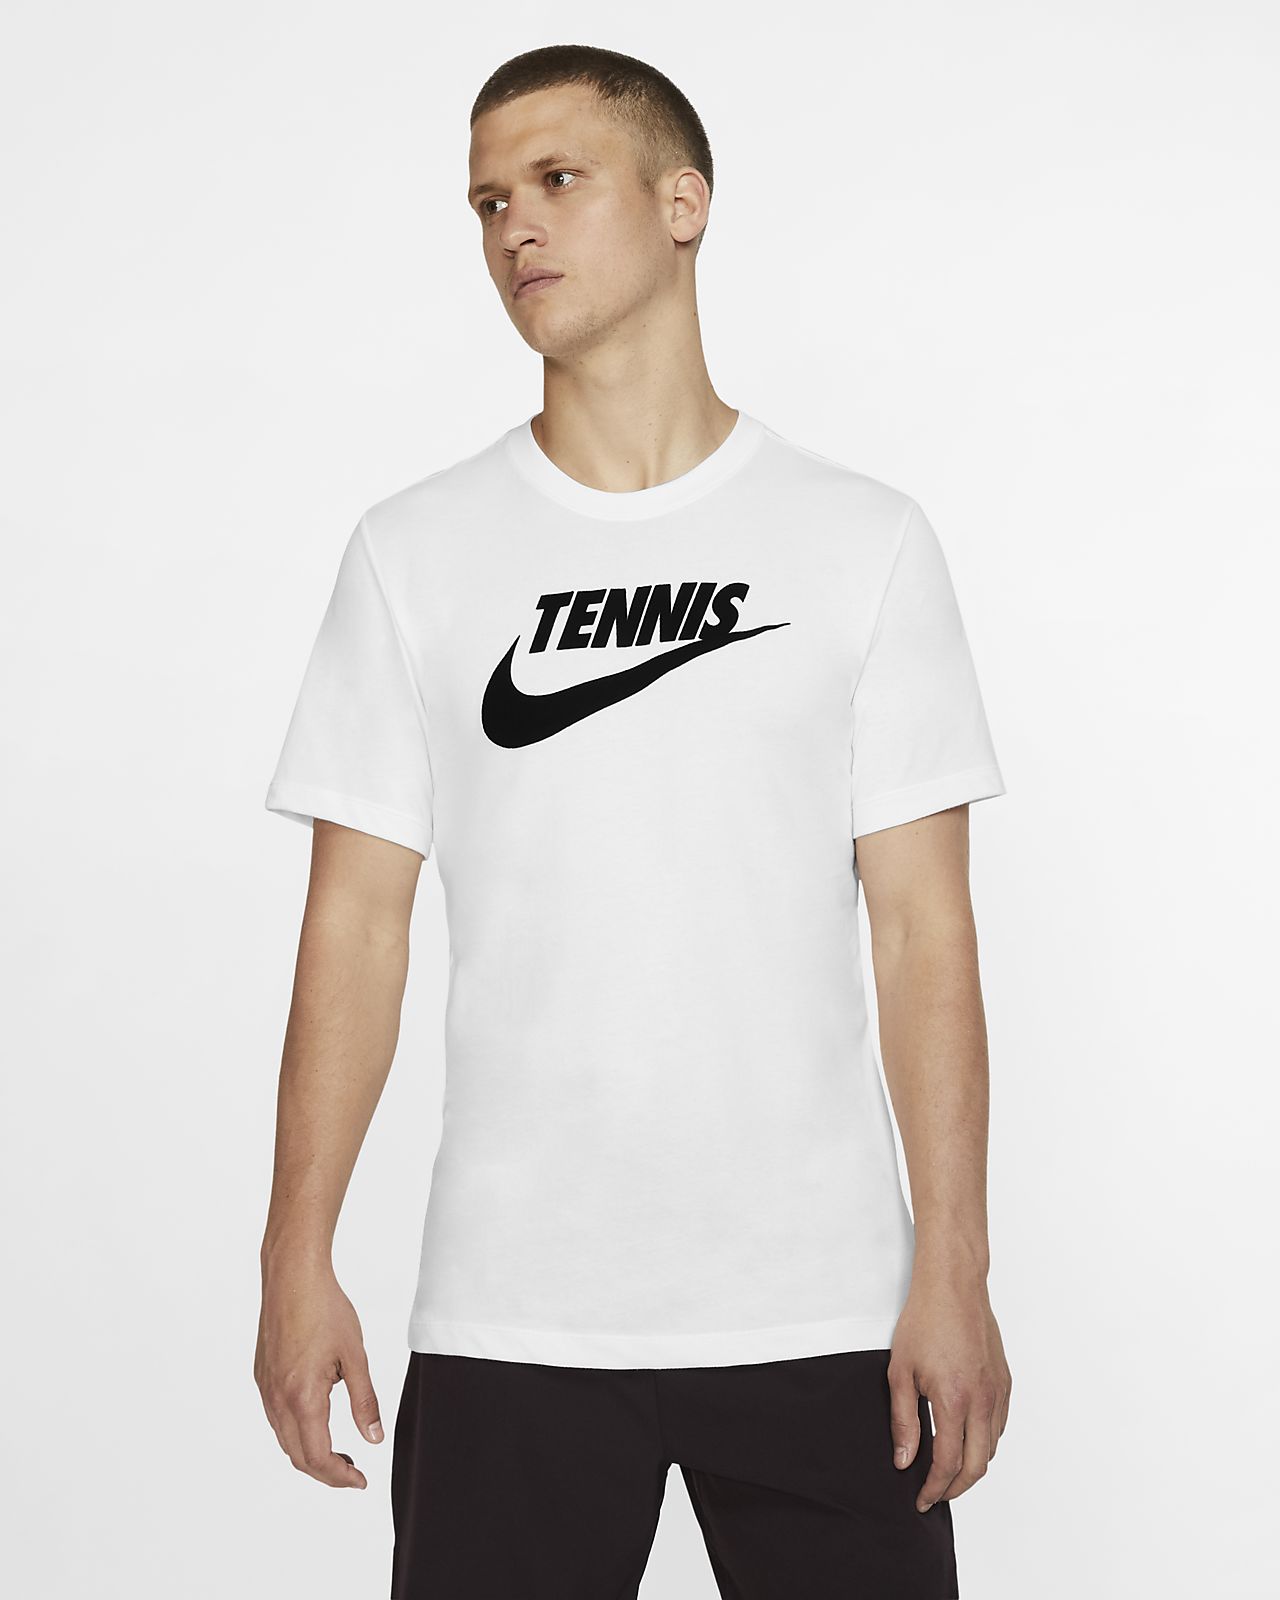 nike t shirt tennis cheap online